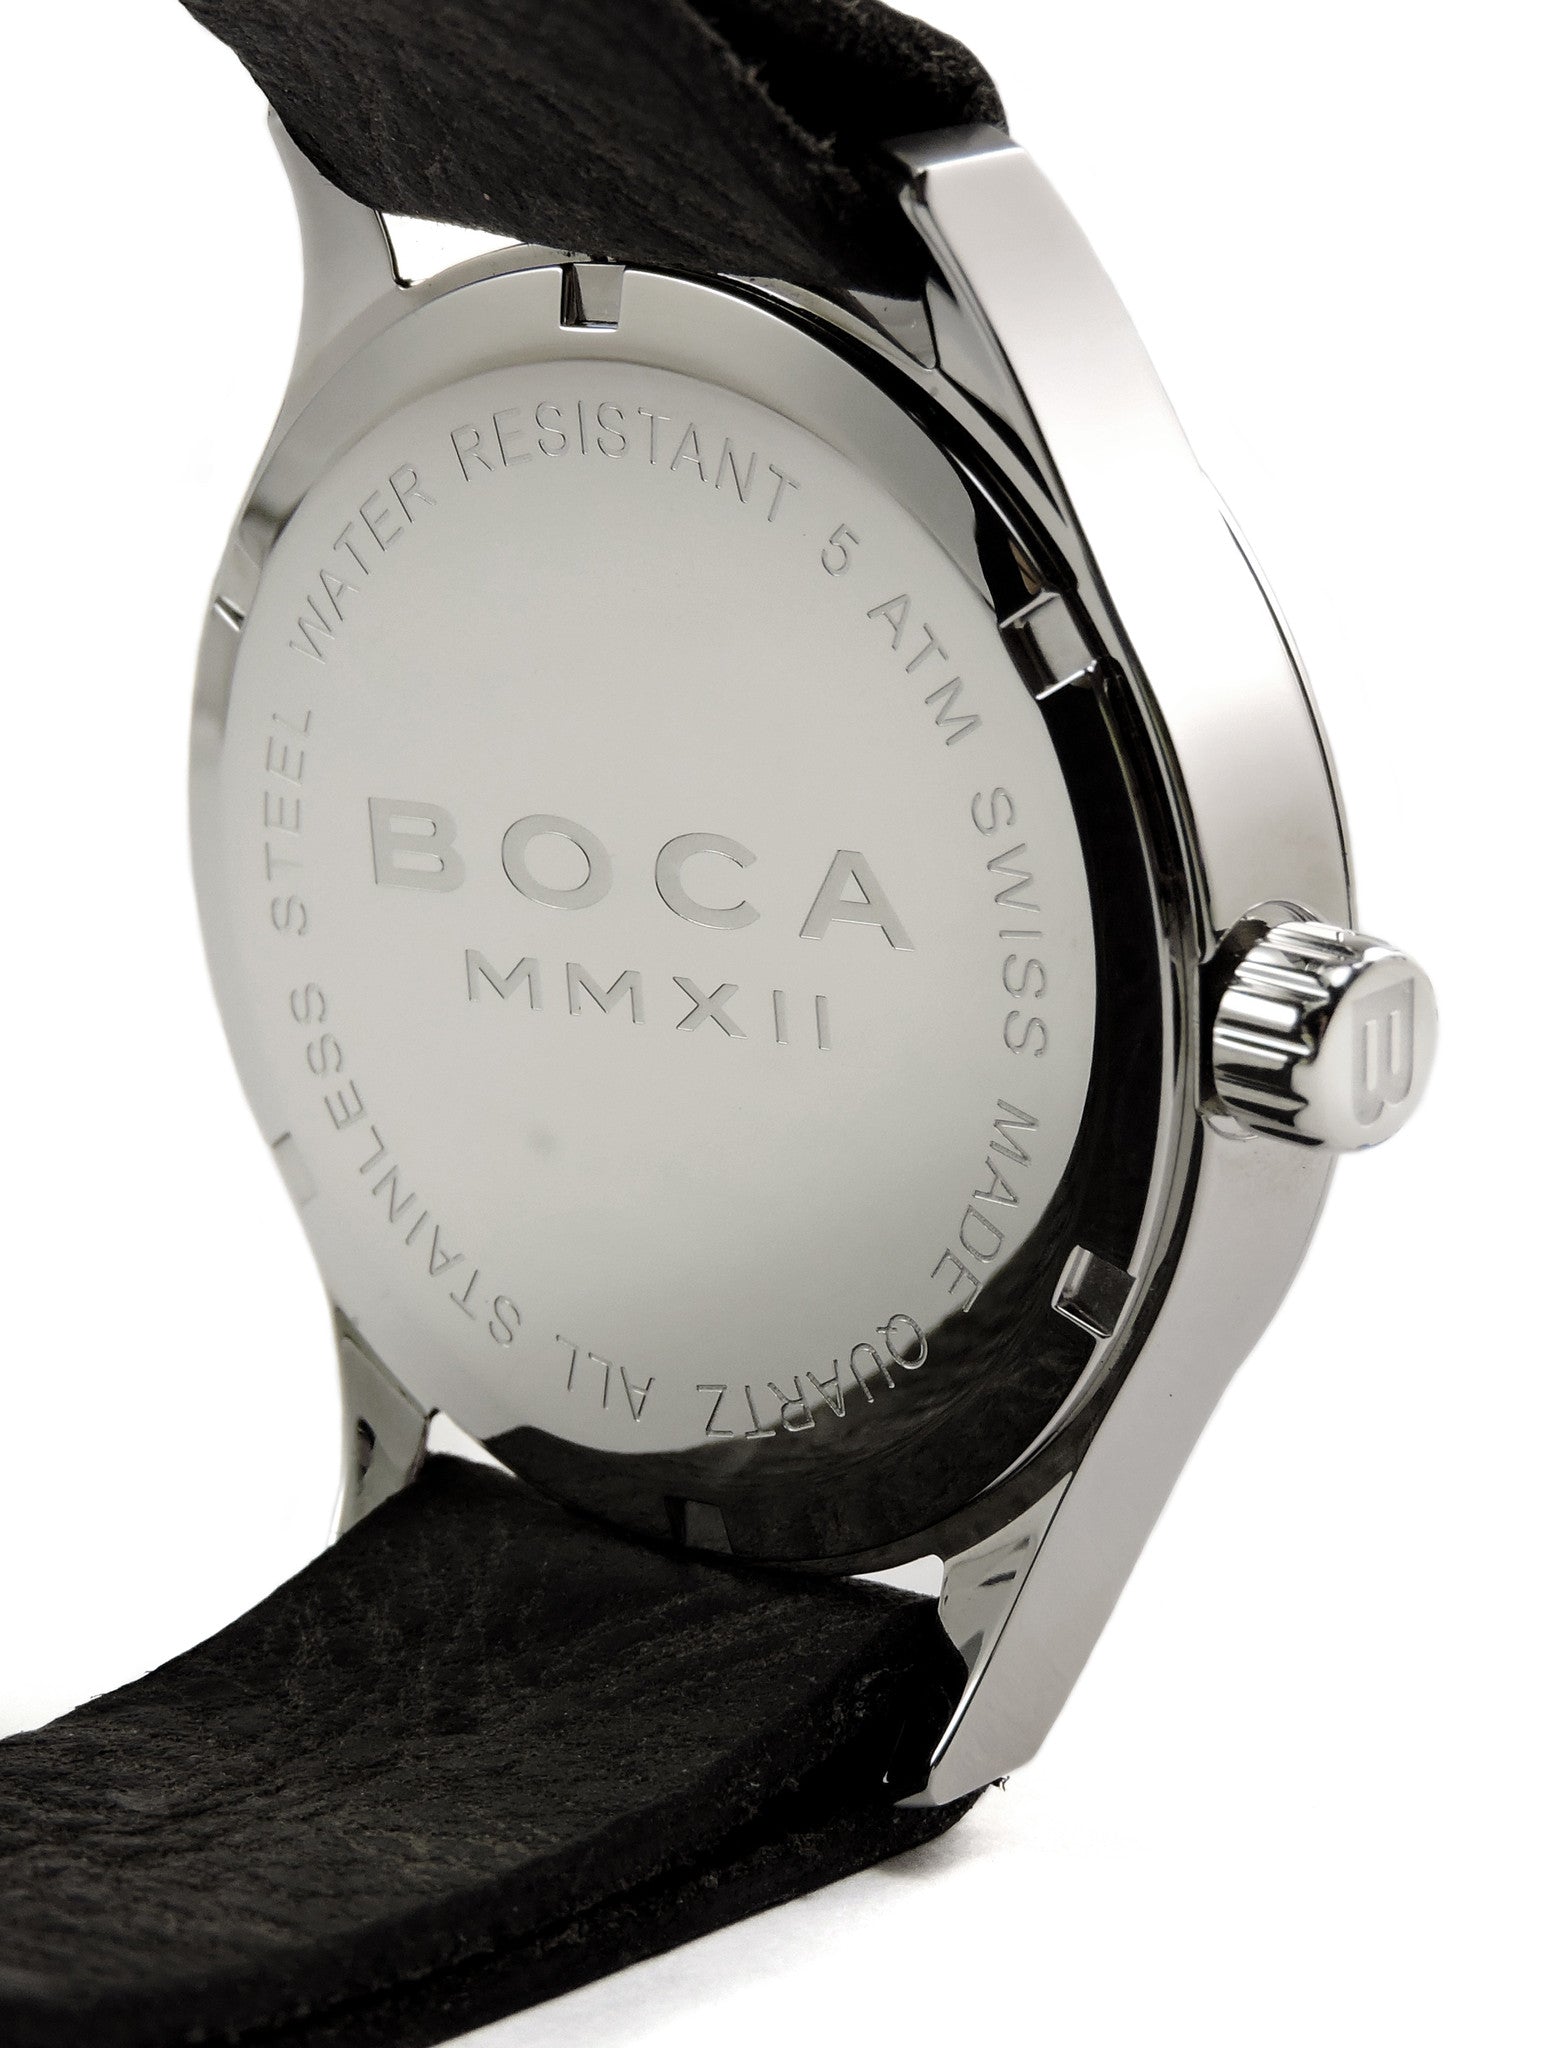 Primero Black - Silver Wristband - BOCA MMXII - Official website